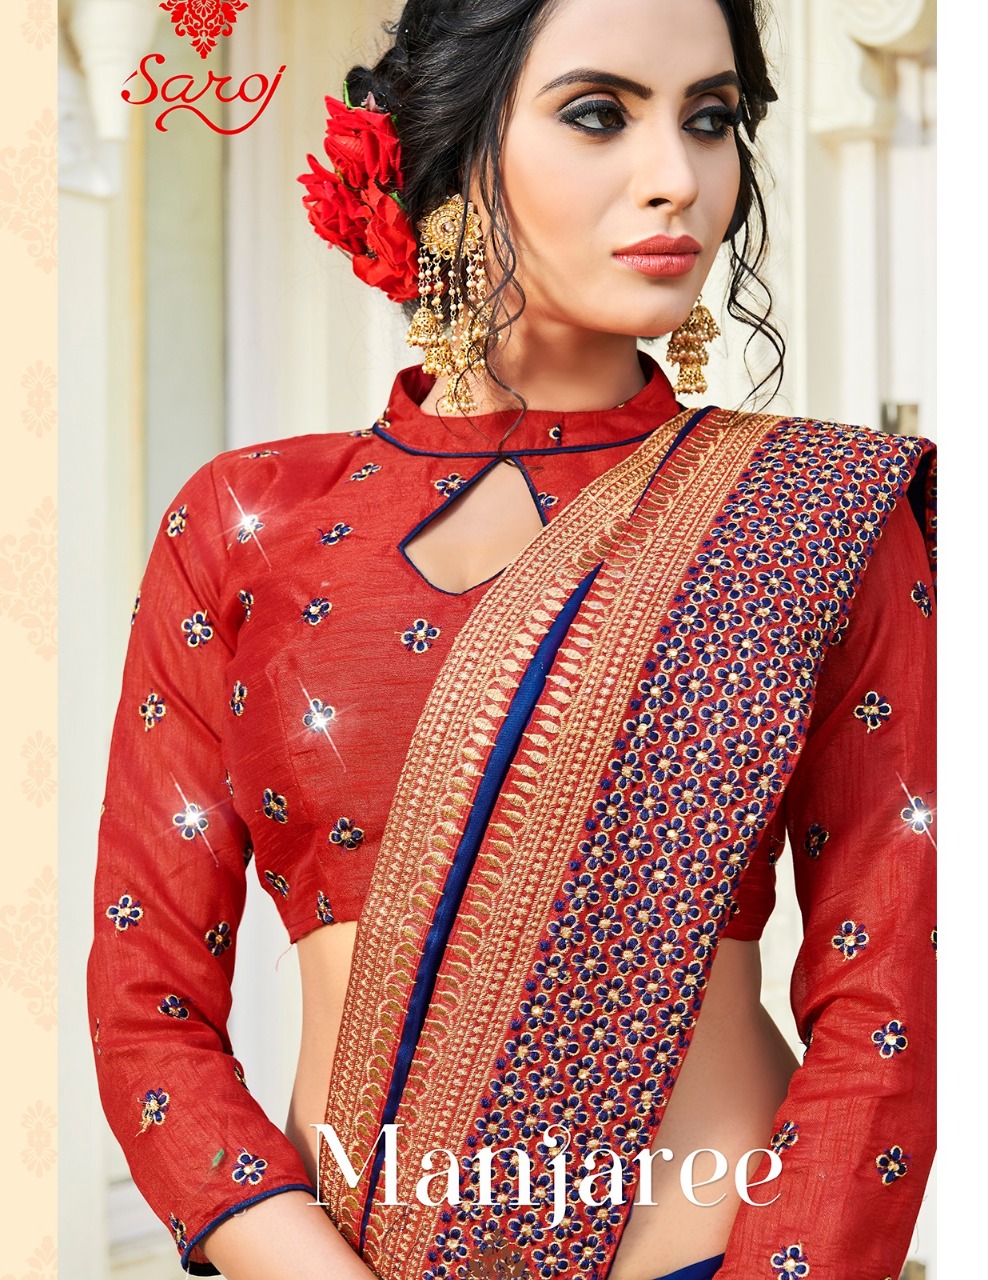 Saroj manjaree traditional Wear Stylish silk sarees Collection